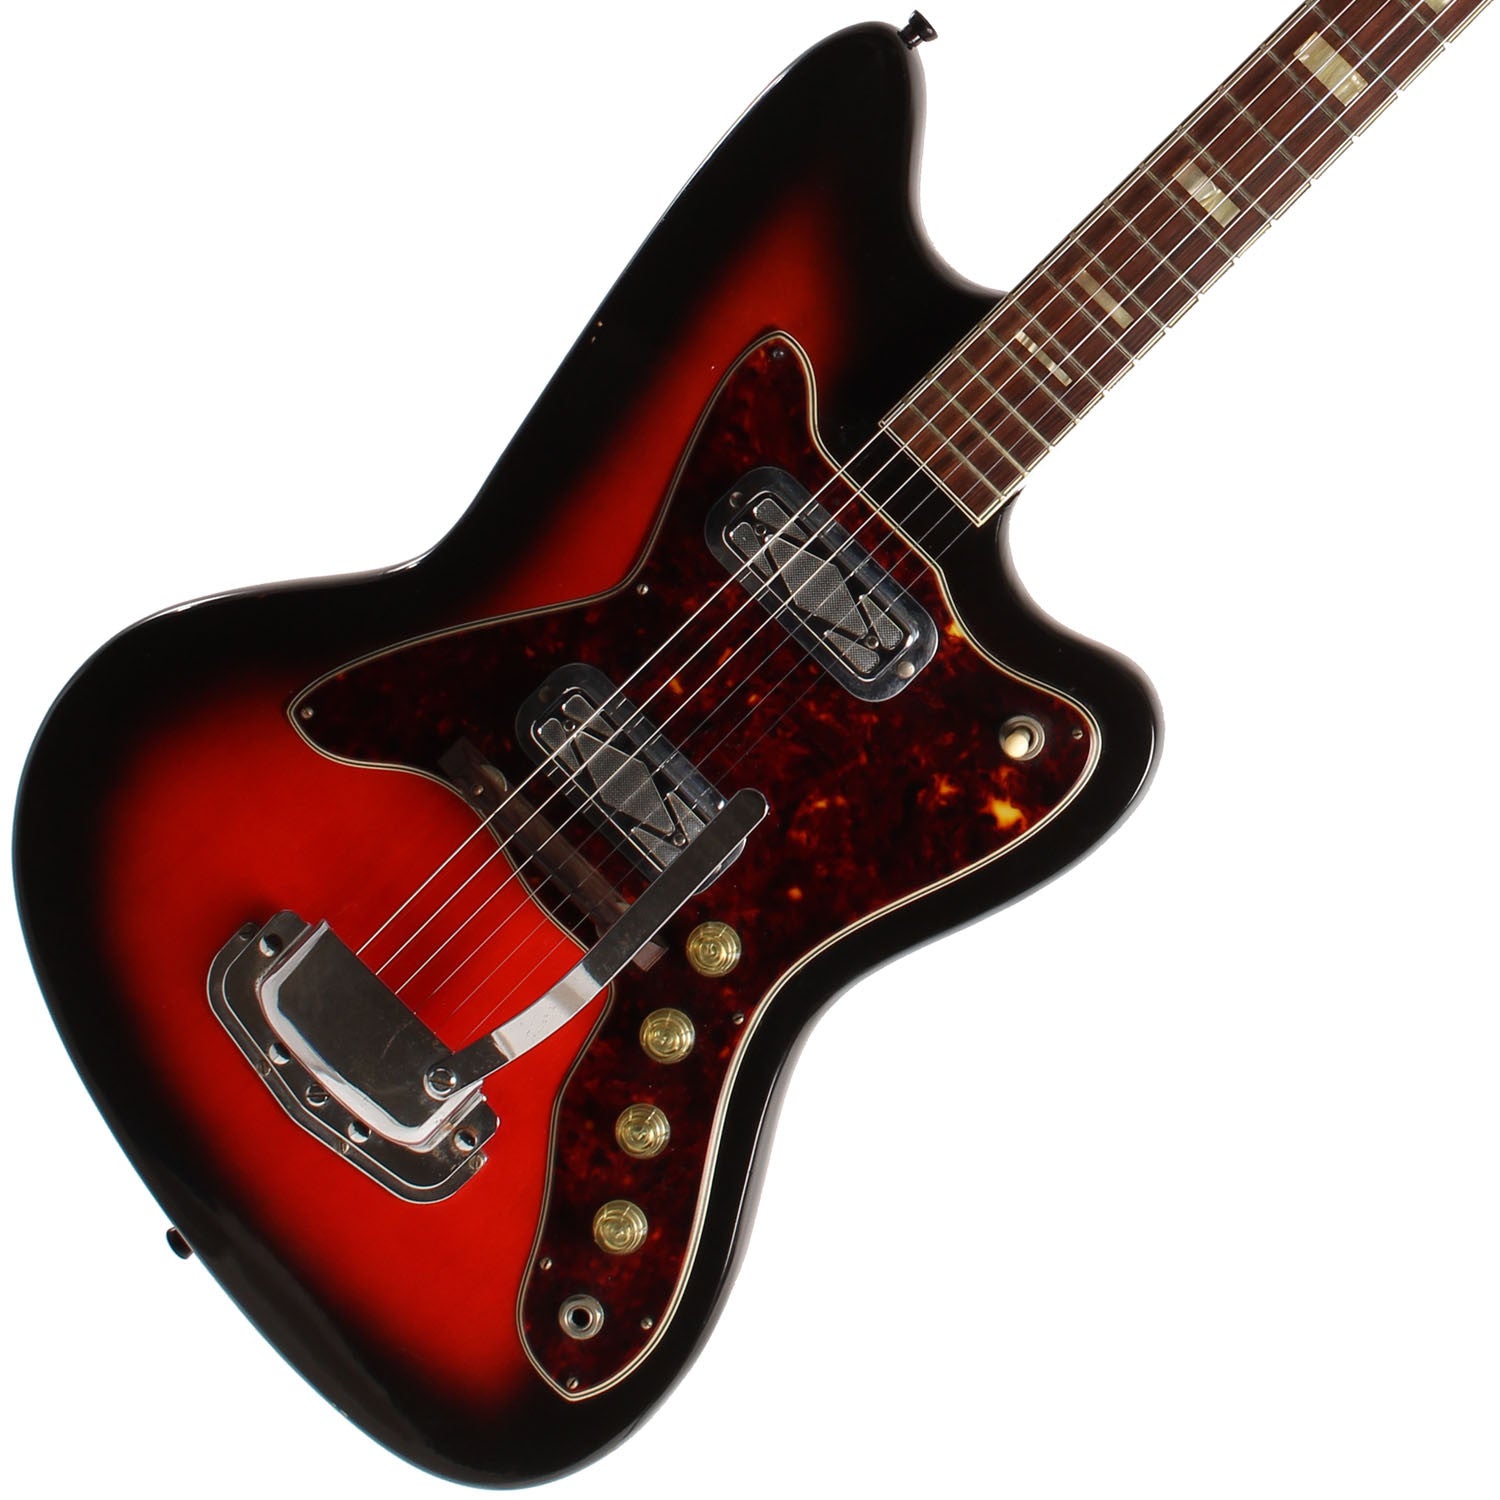 1965 Silvertone 1478 Silhouette - Garrett Park Guitars
 - 1